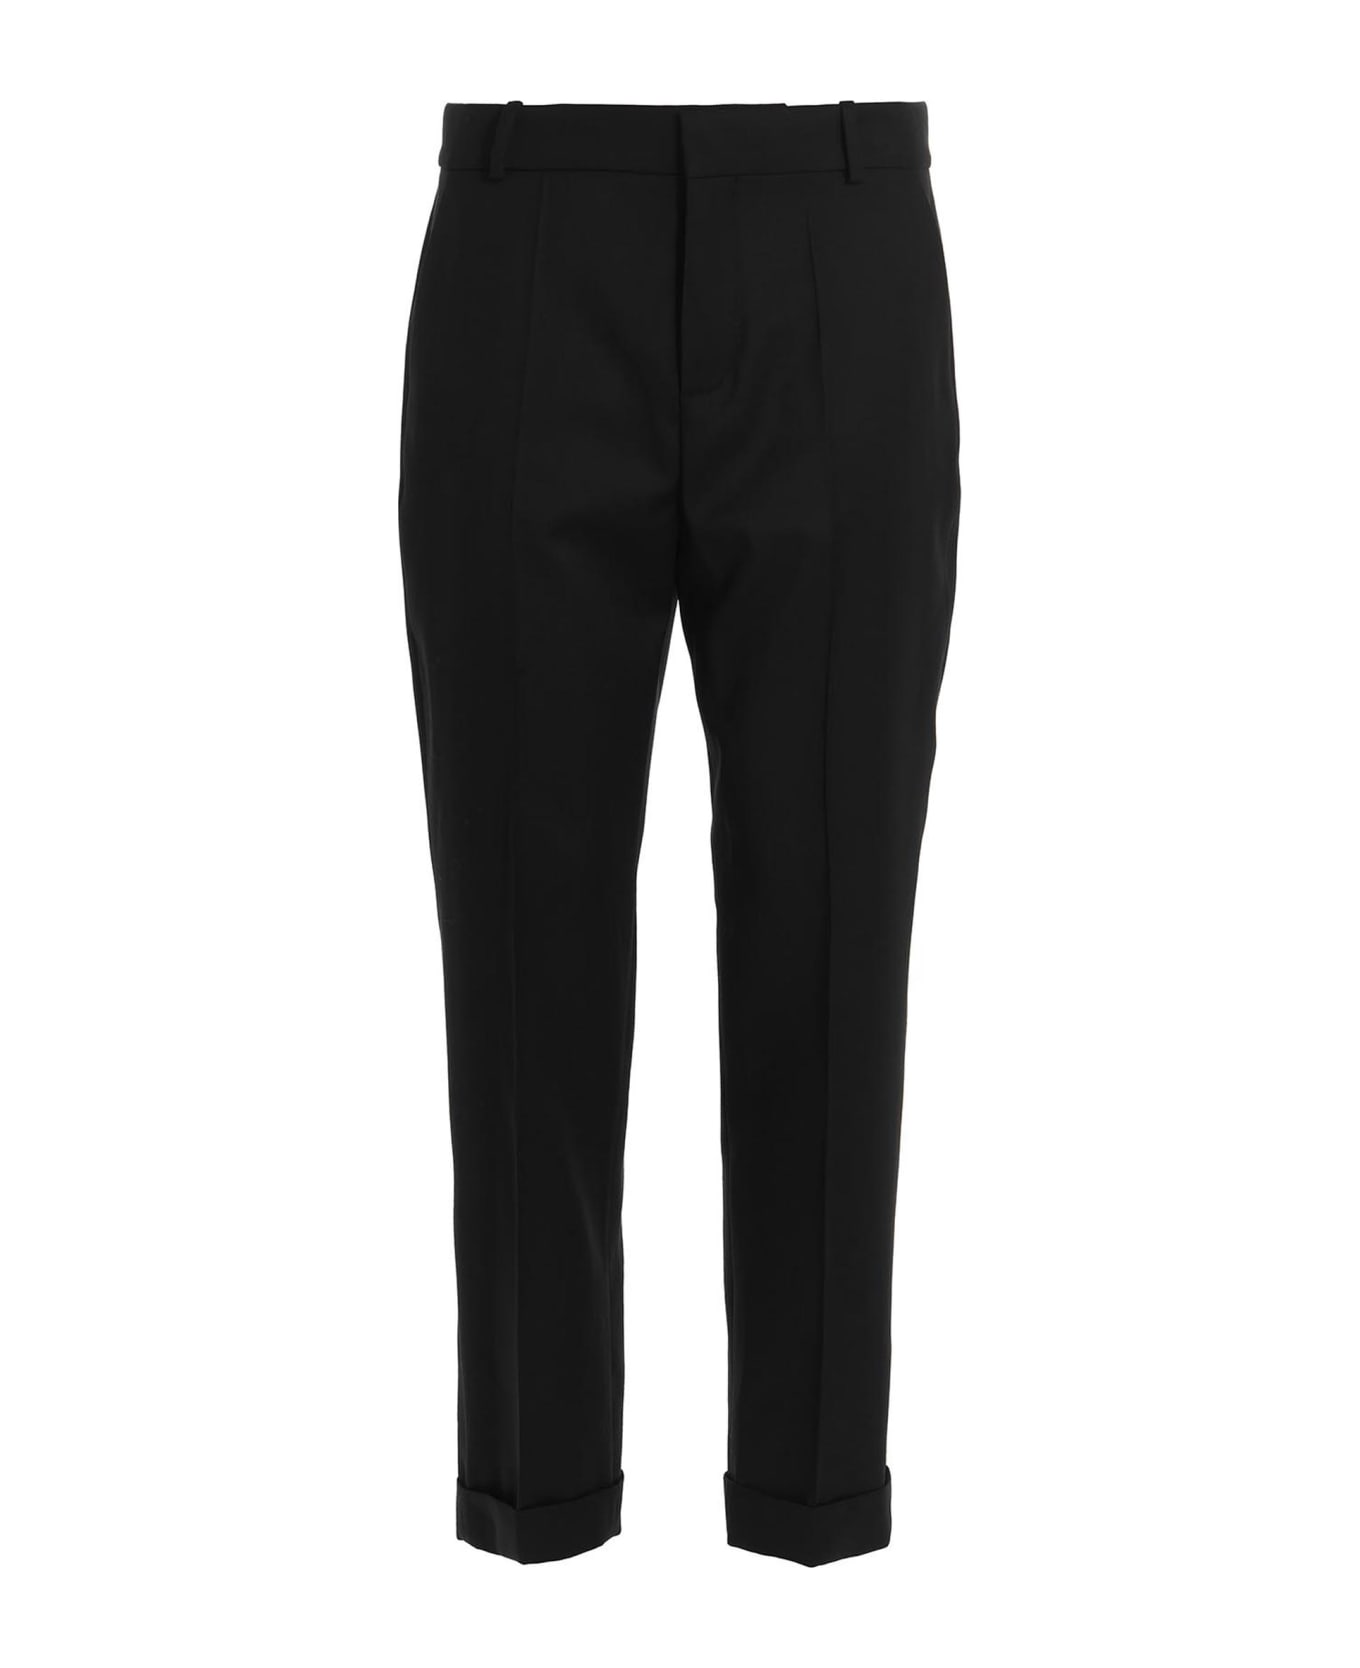 Balmain Pants In Black Wool - Black